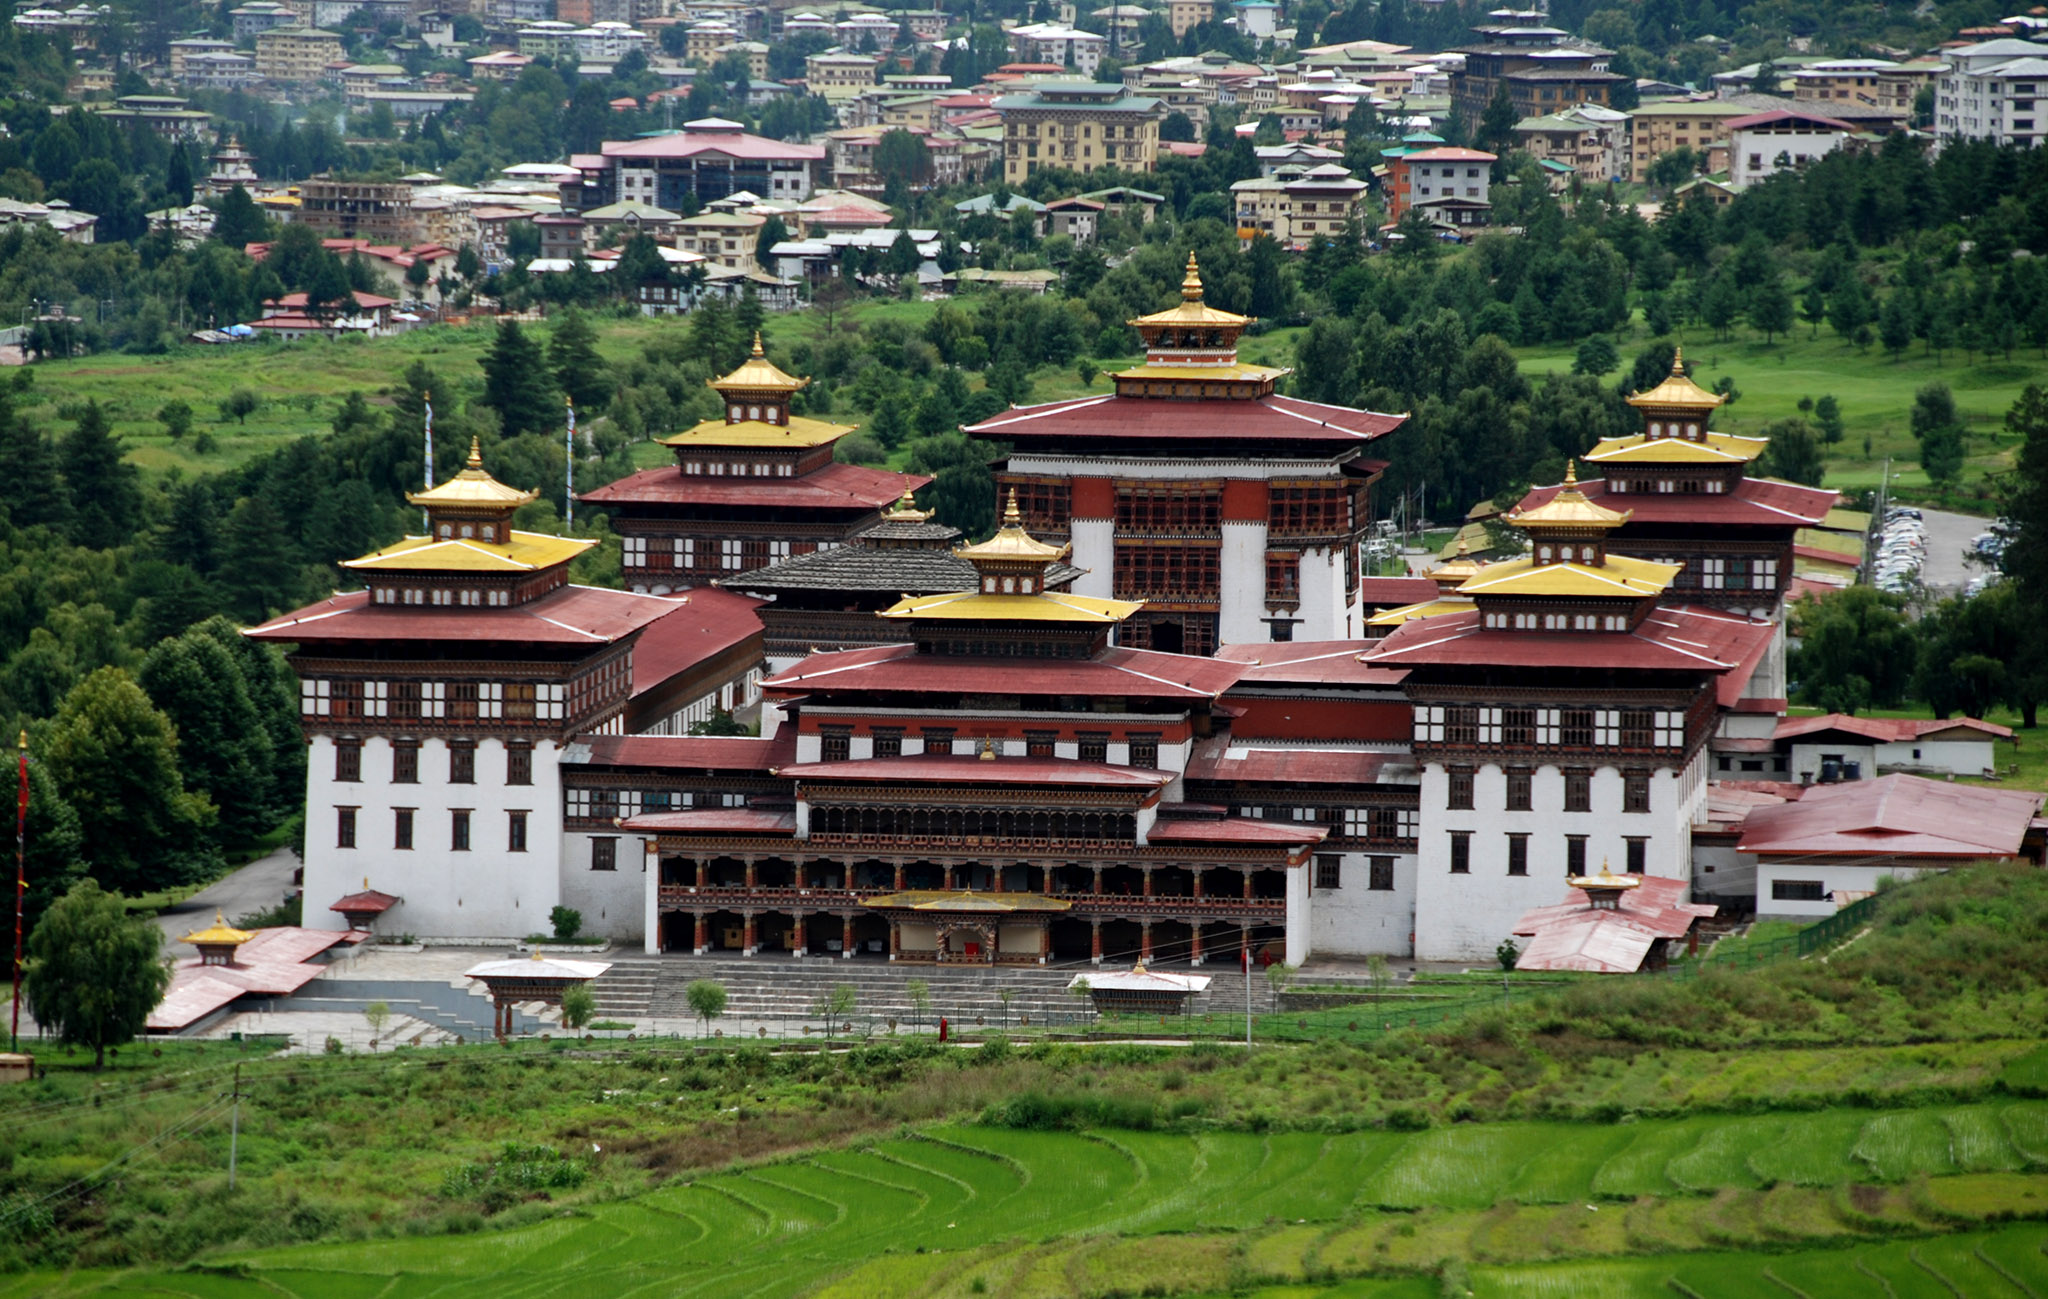 tashichho-dzong